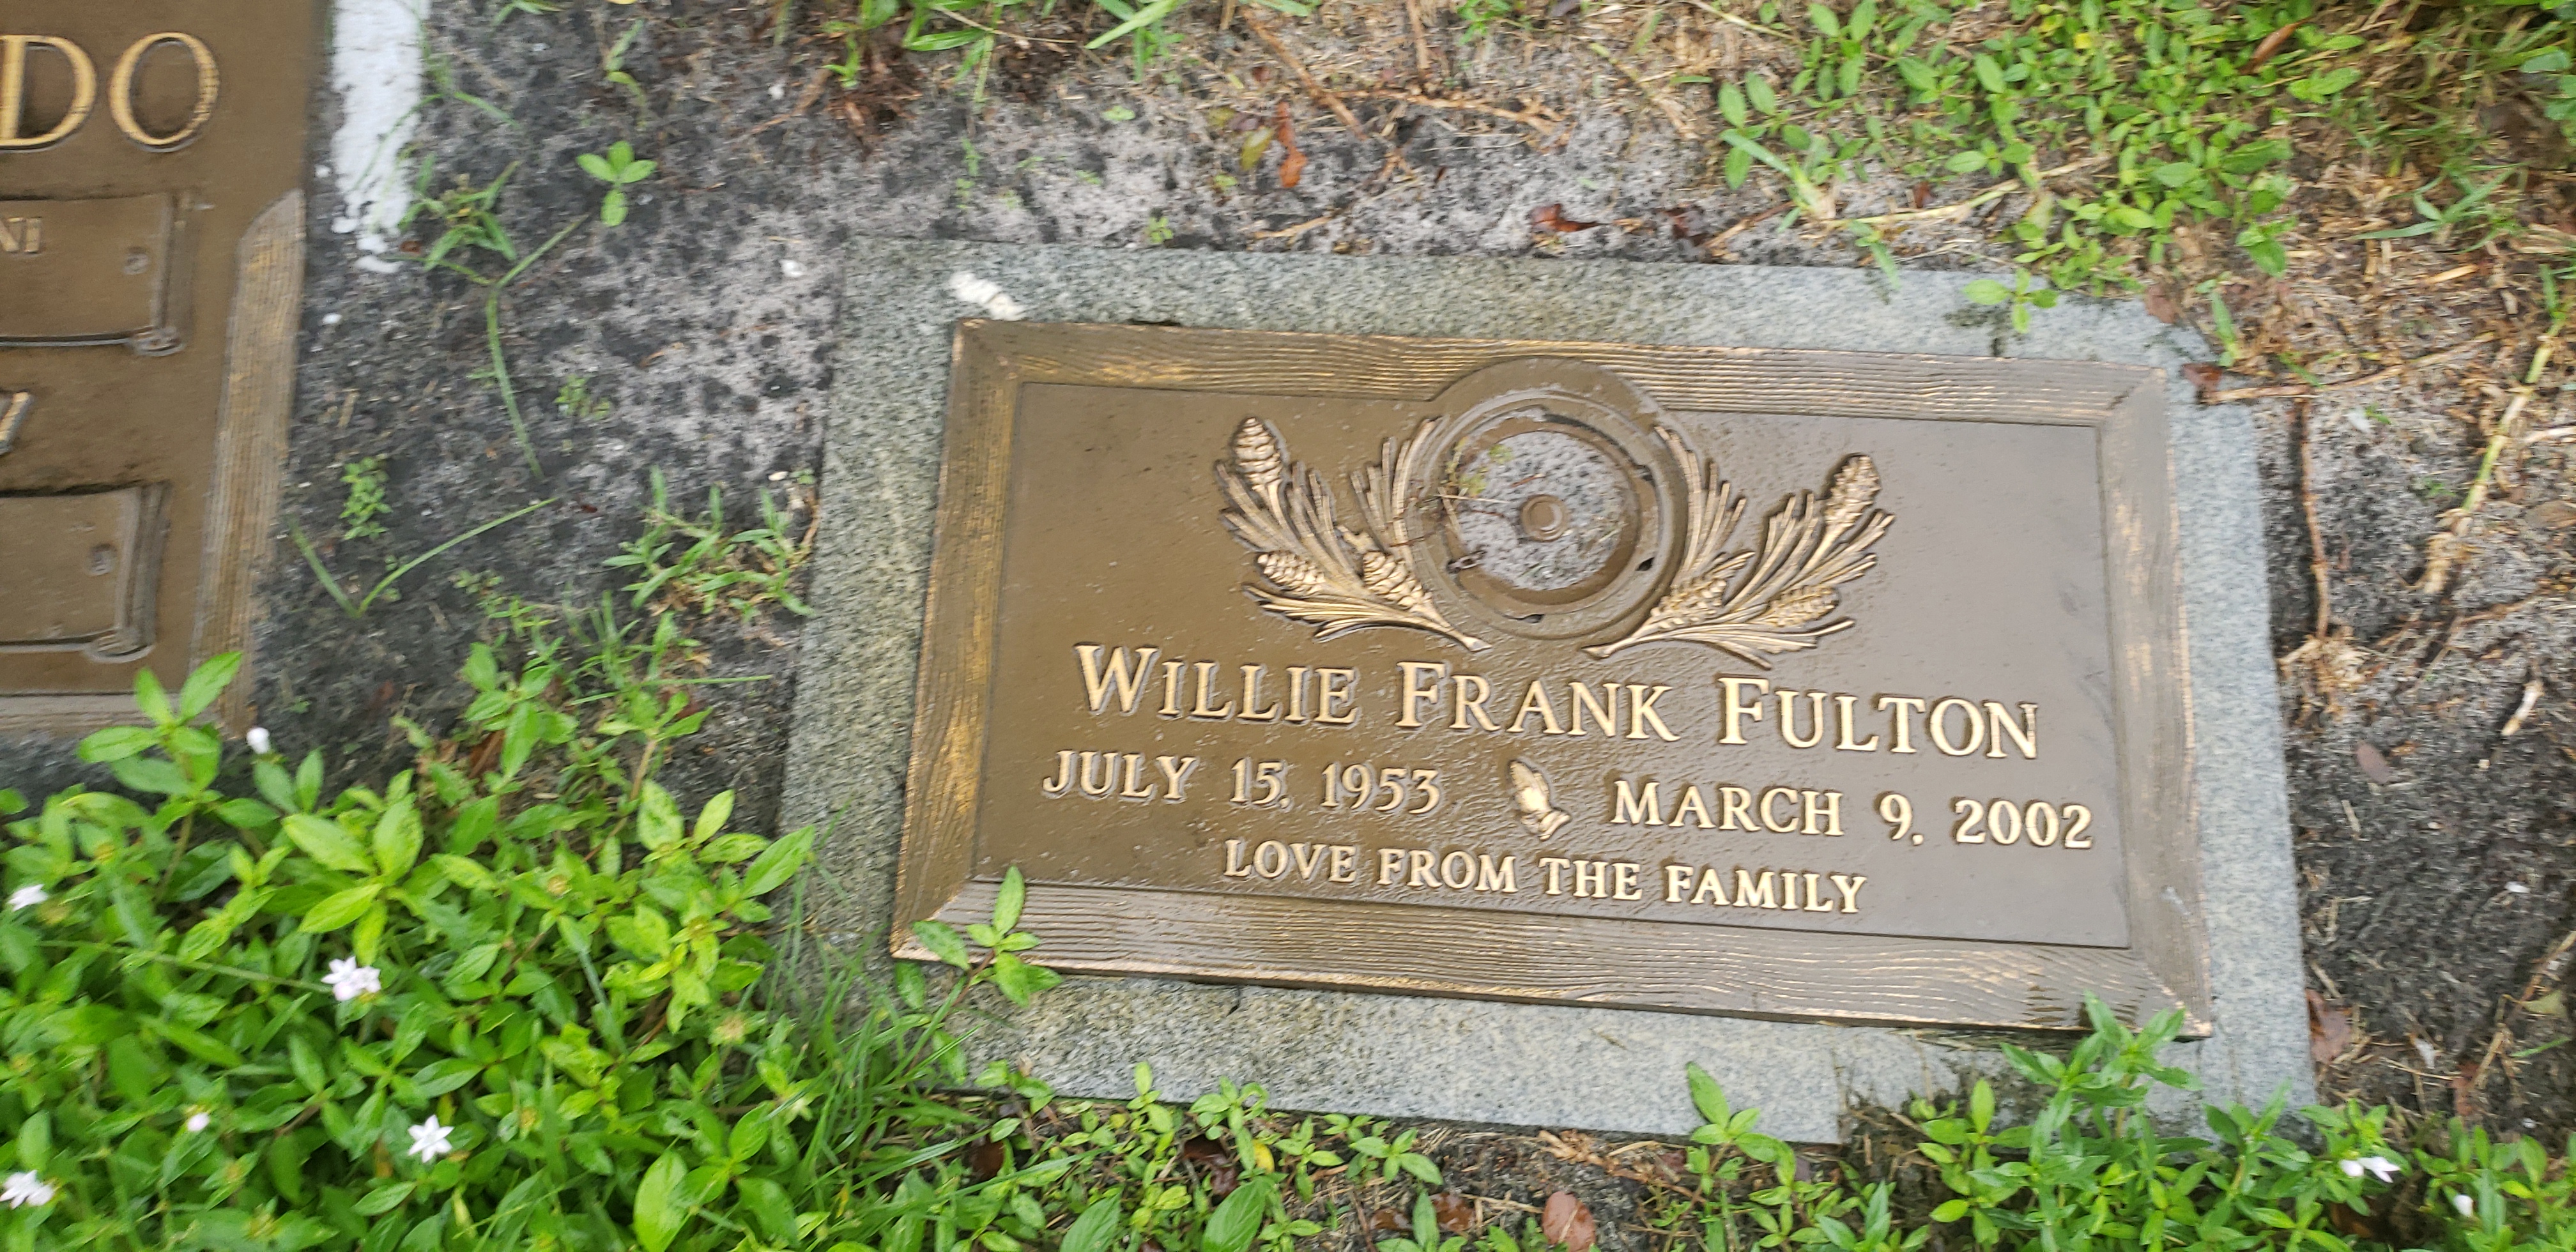 Willie Frank Fulton